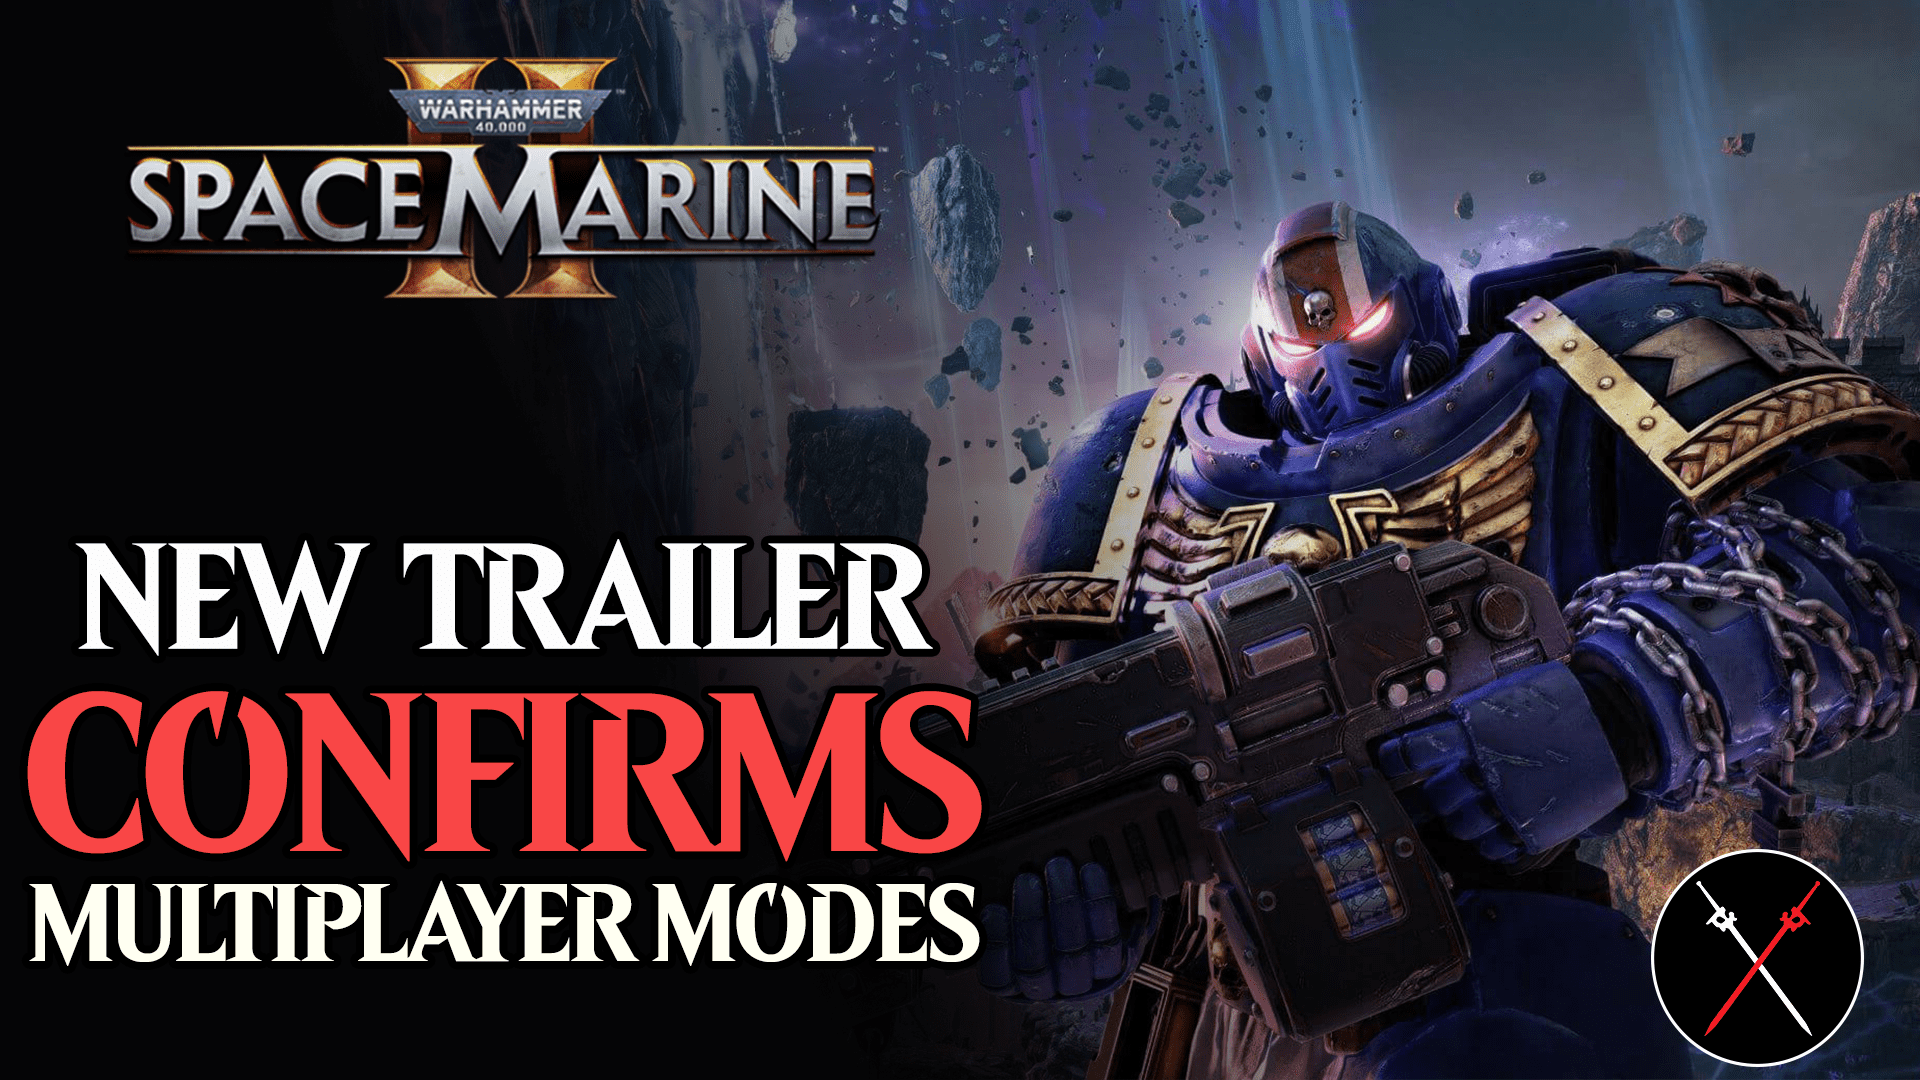 Warhammer 40,000: Space Marine 2 Showcases Its Multiplayer Modes